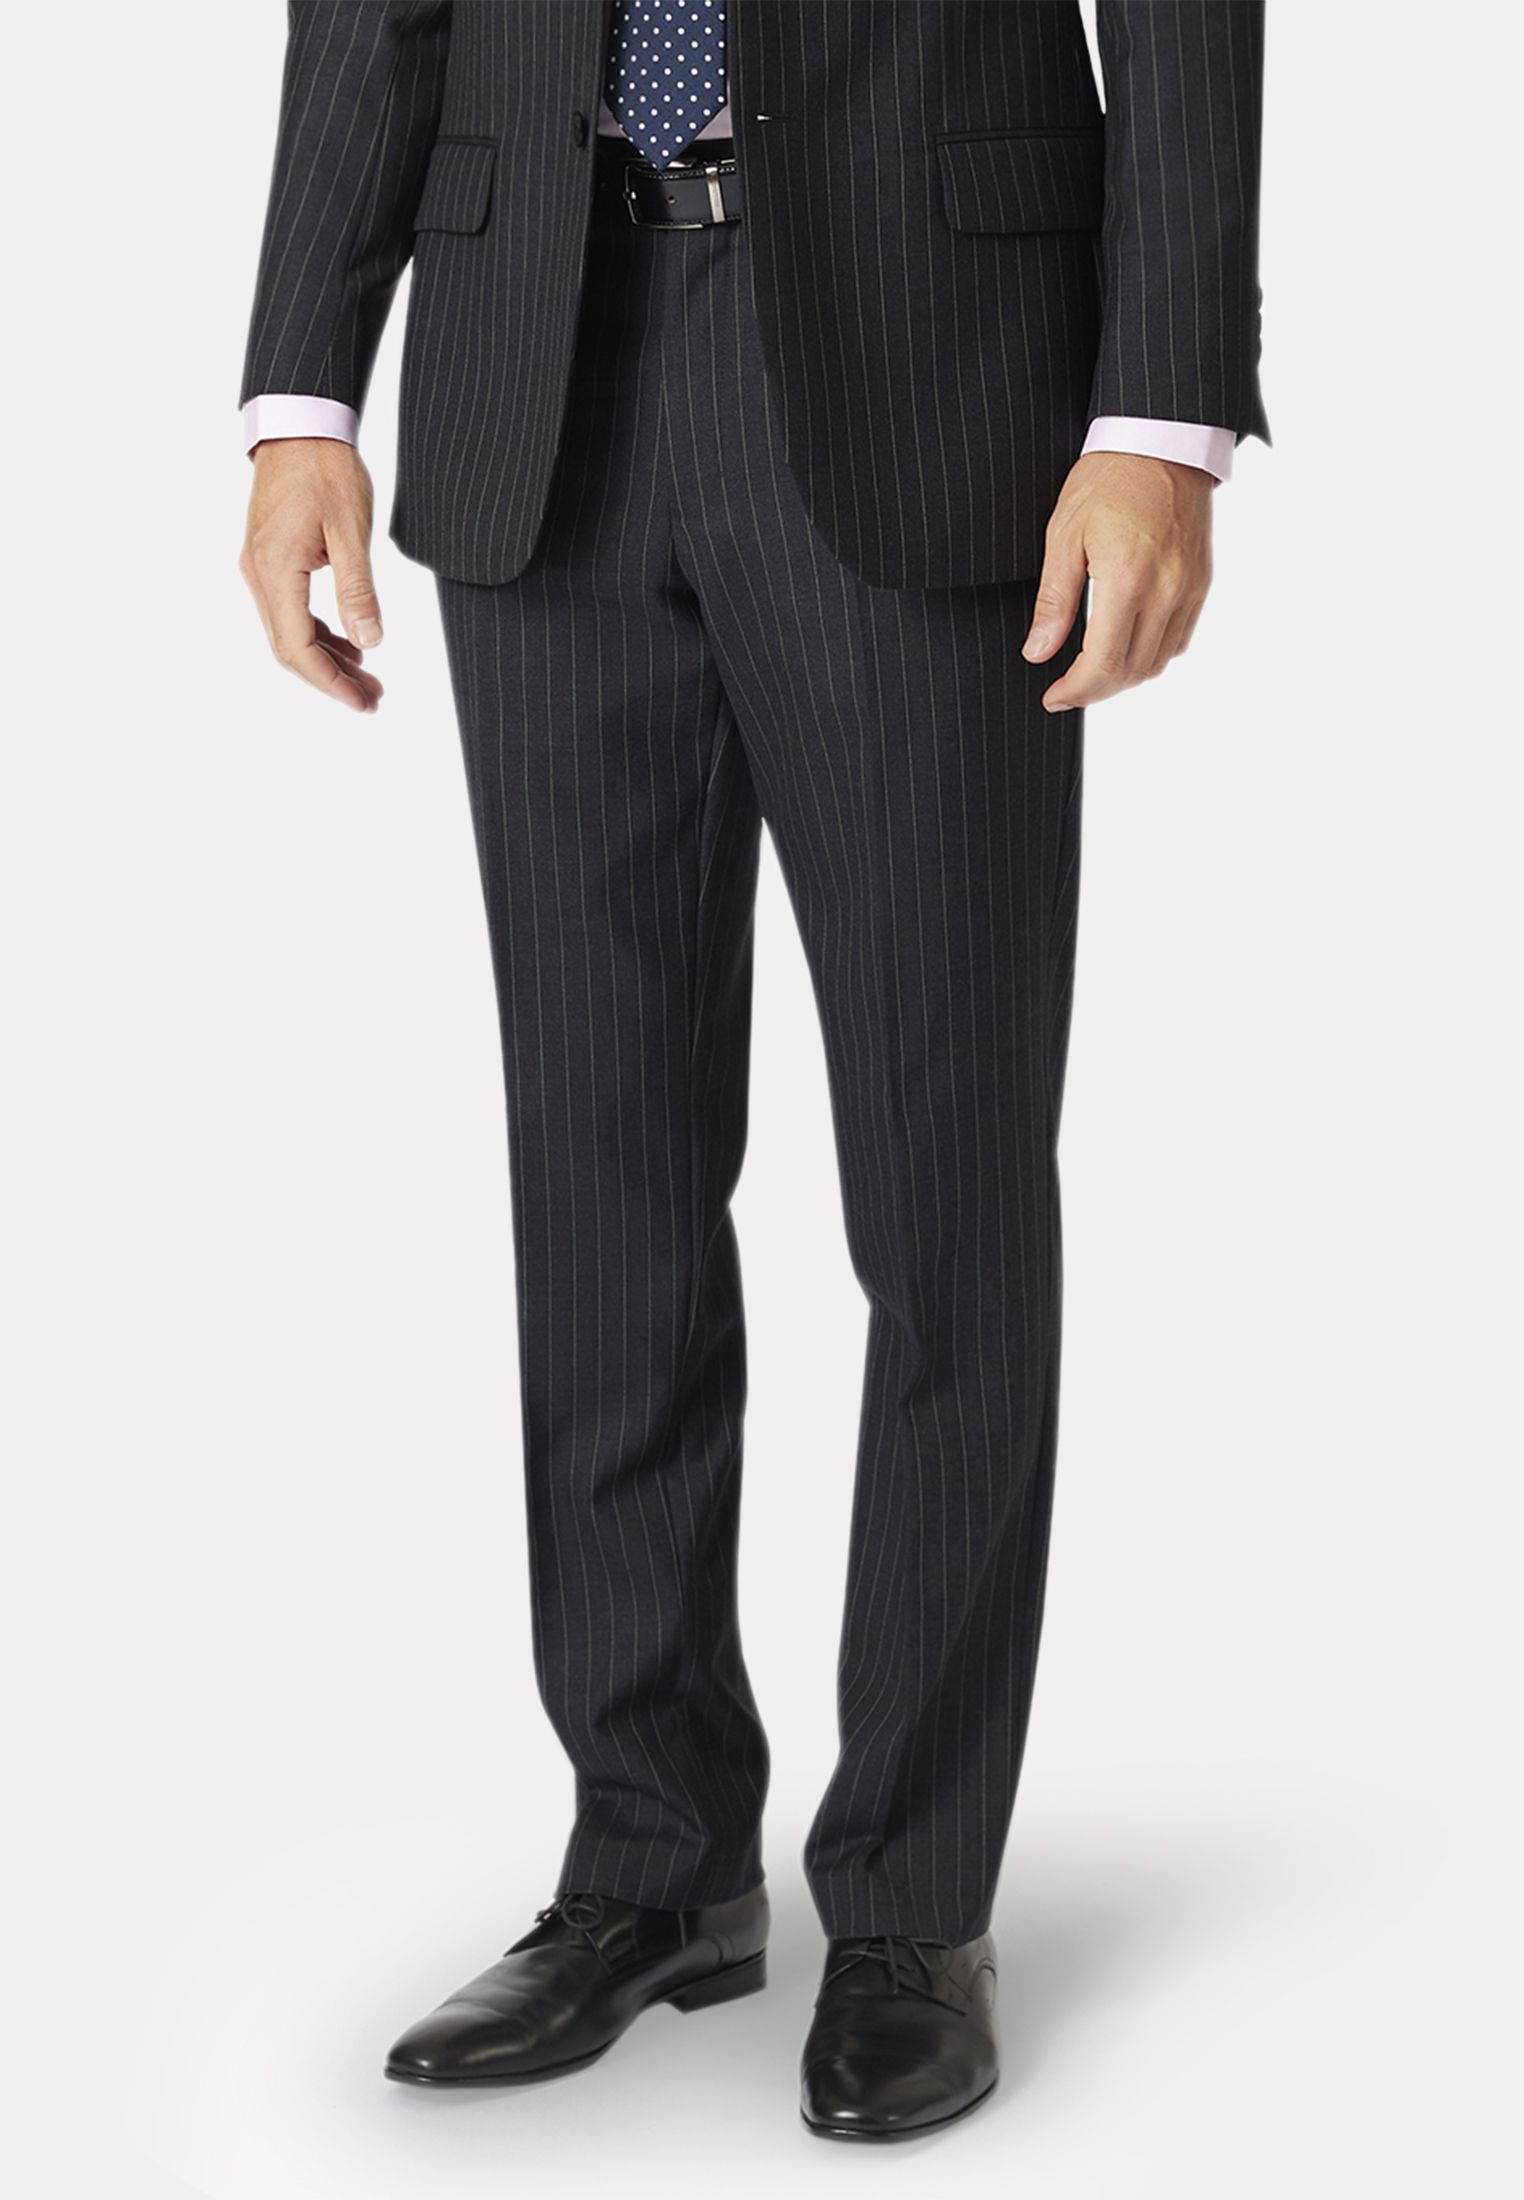 Buy Men Black Solid Regular Fit Formal Two Piece Suit Online - 559089 |  Peter England